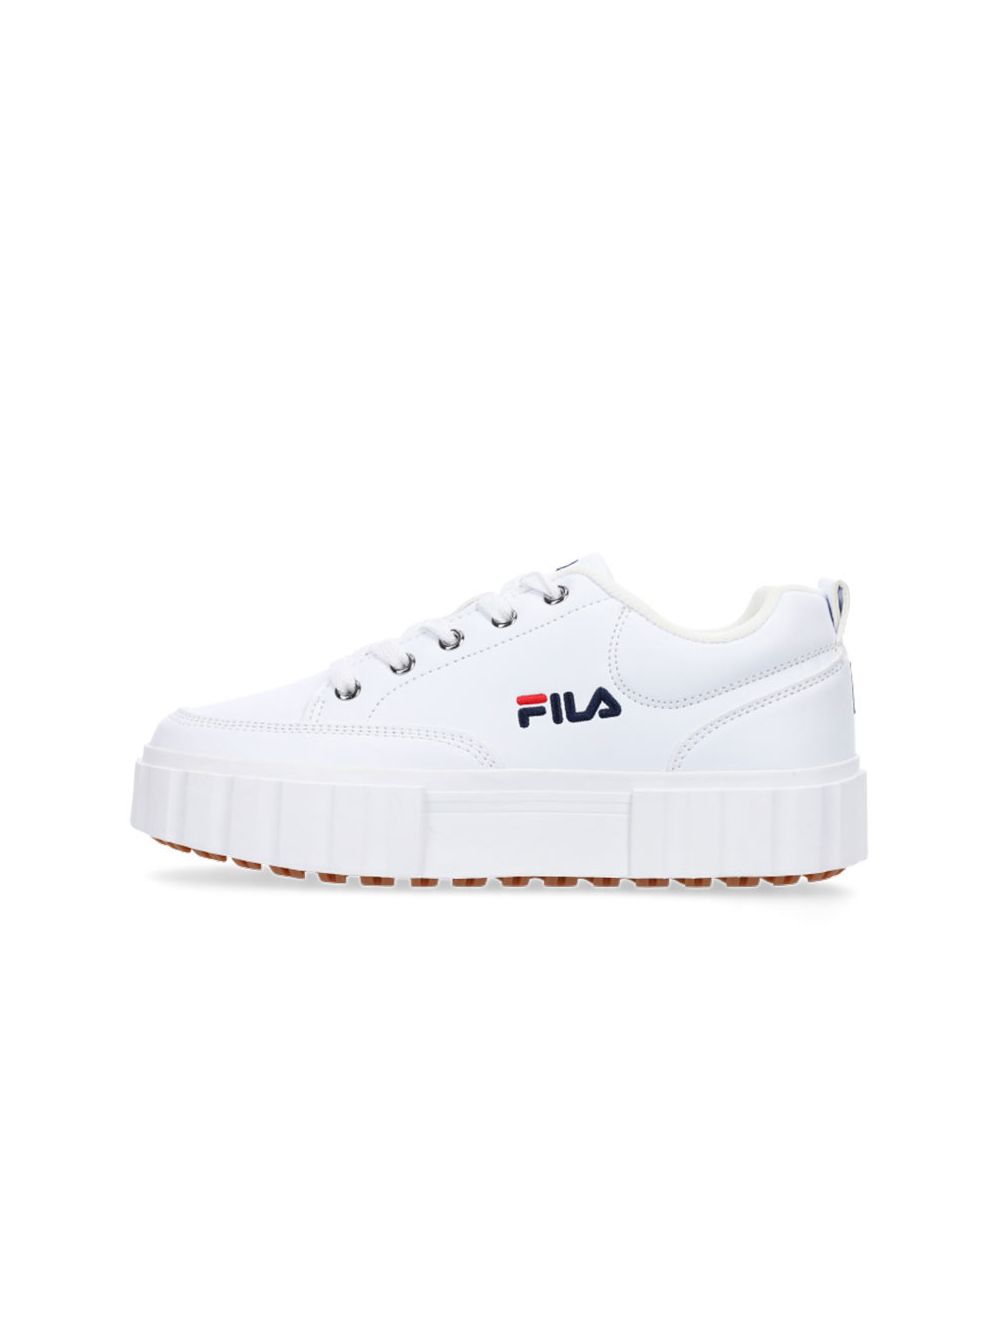 Fila Sandblast Low PU Sneaker Womens White Red Navy